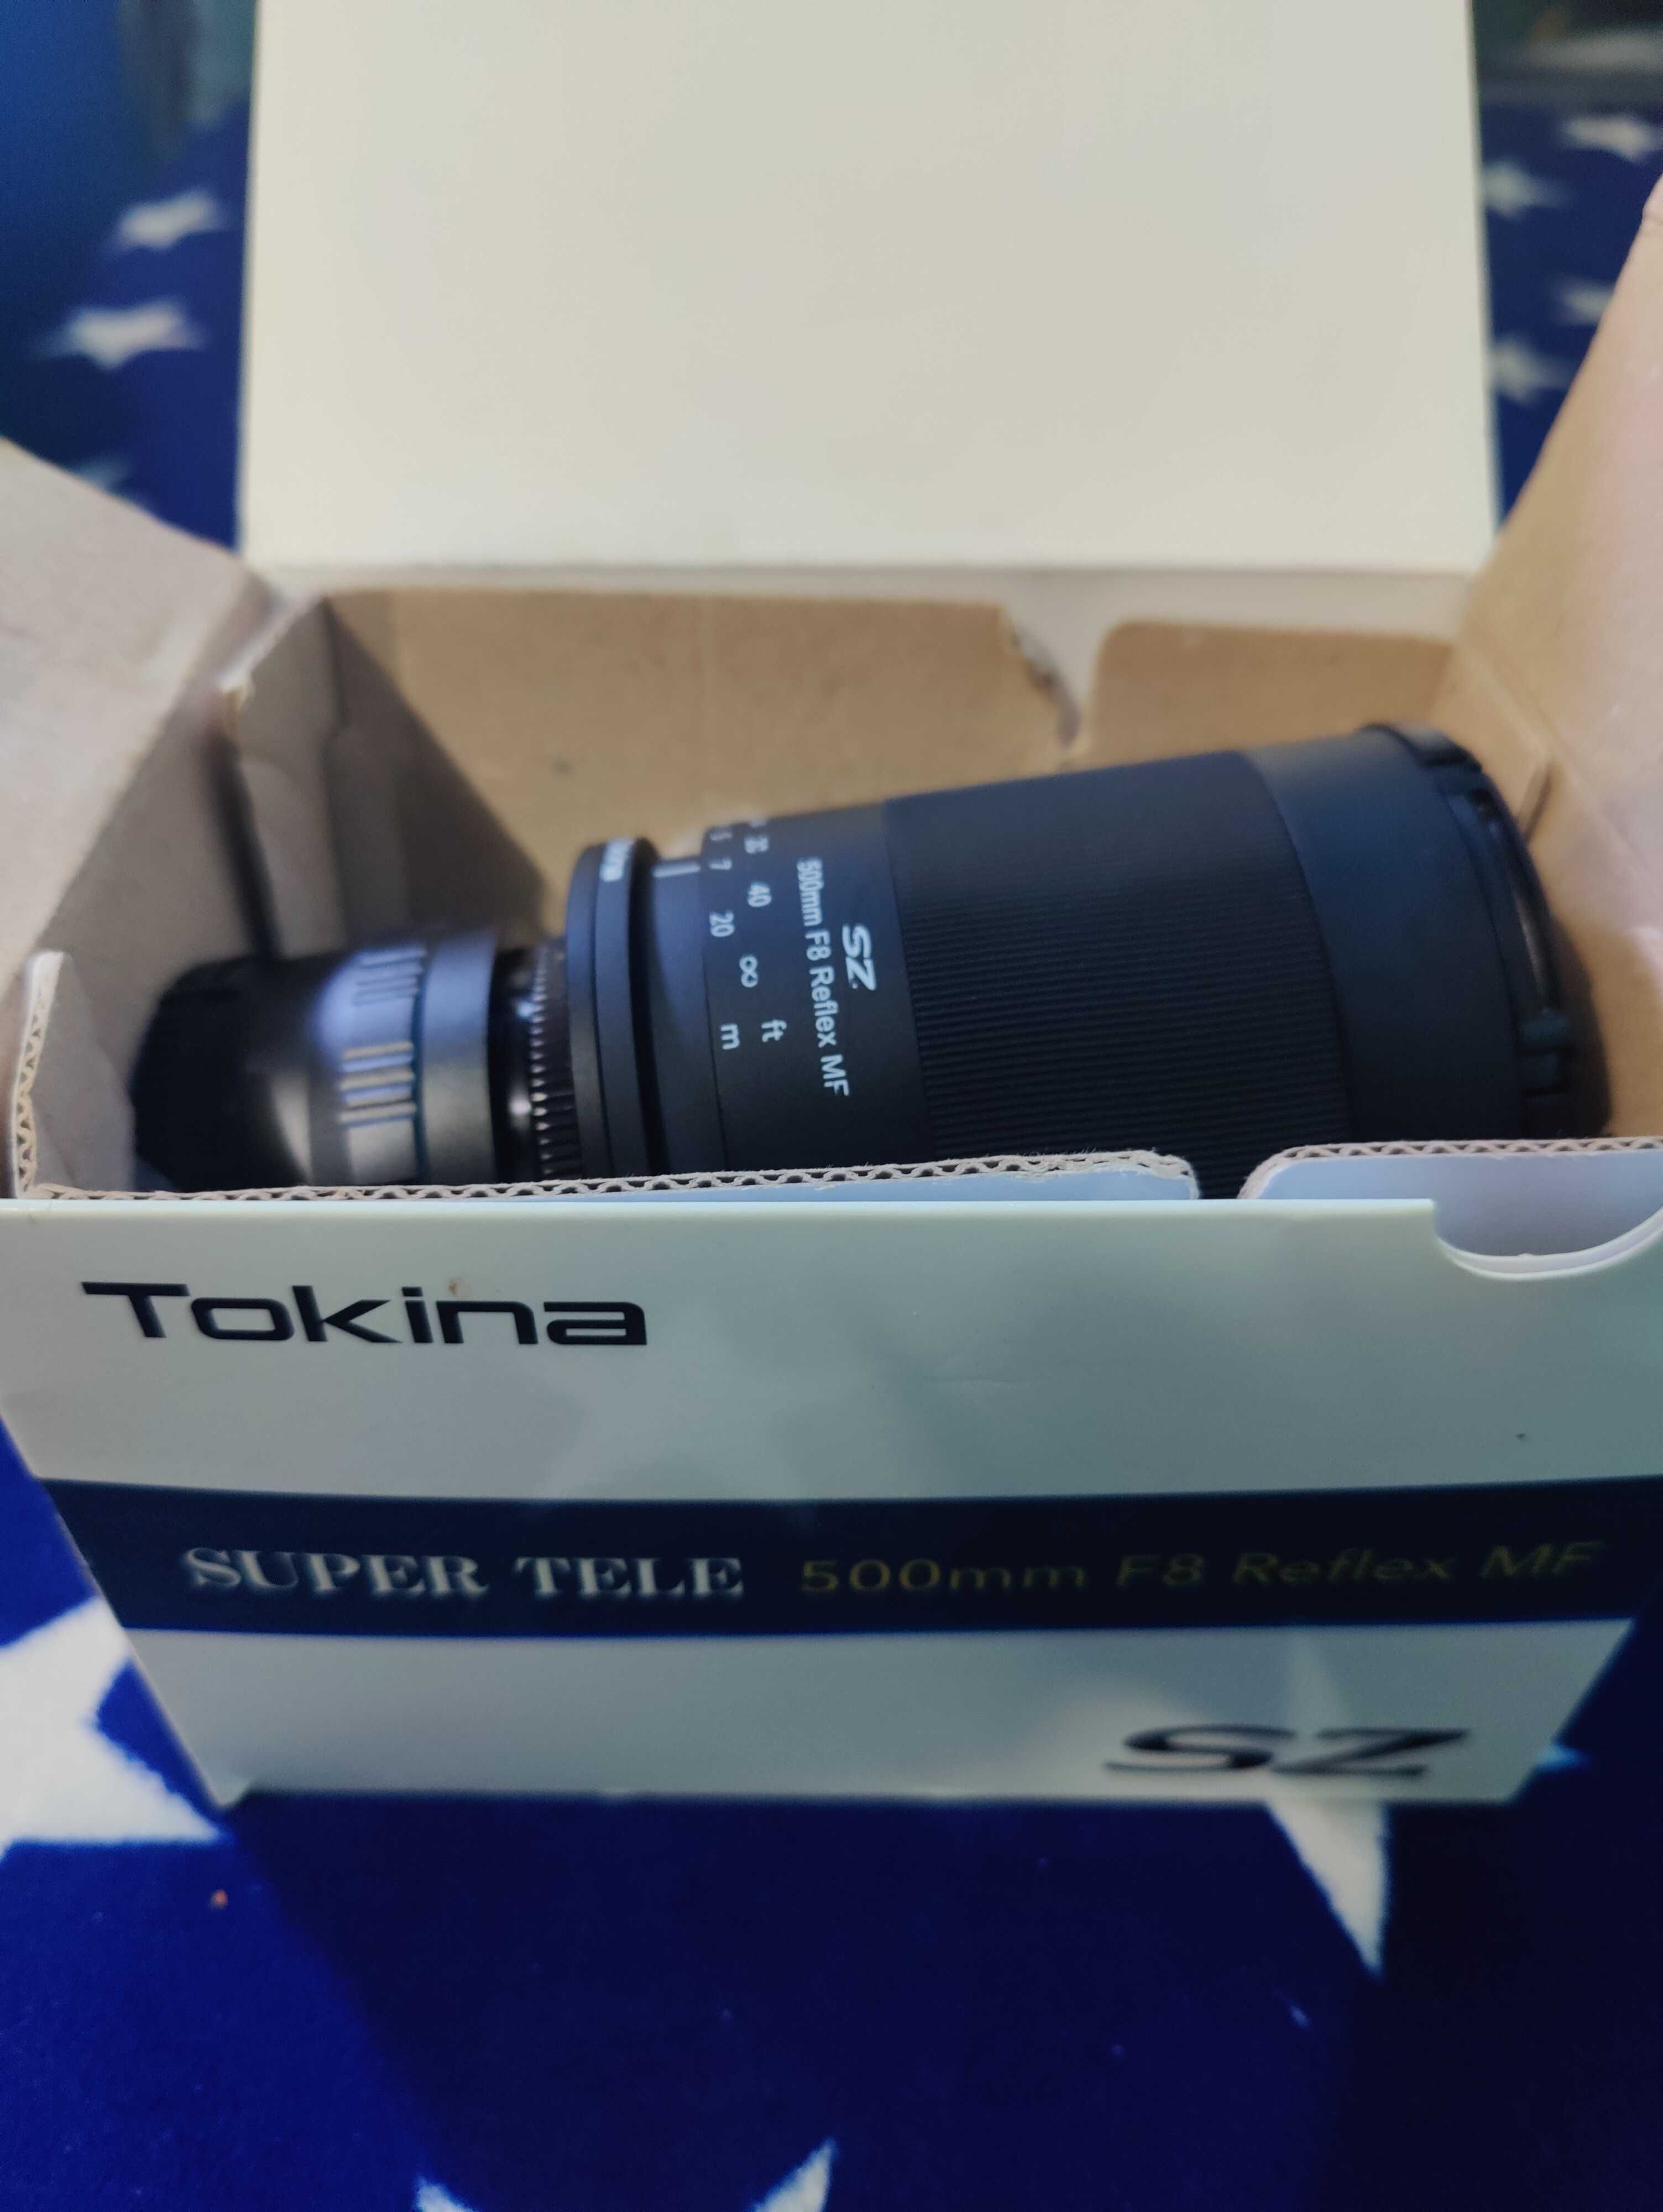 Tokina SZ SUPER TELE 500mm F/8 Reflex Lens 2022 (T-Mount) (Full Frame)